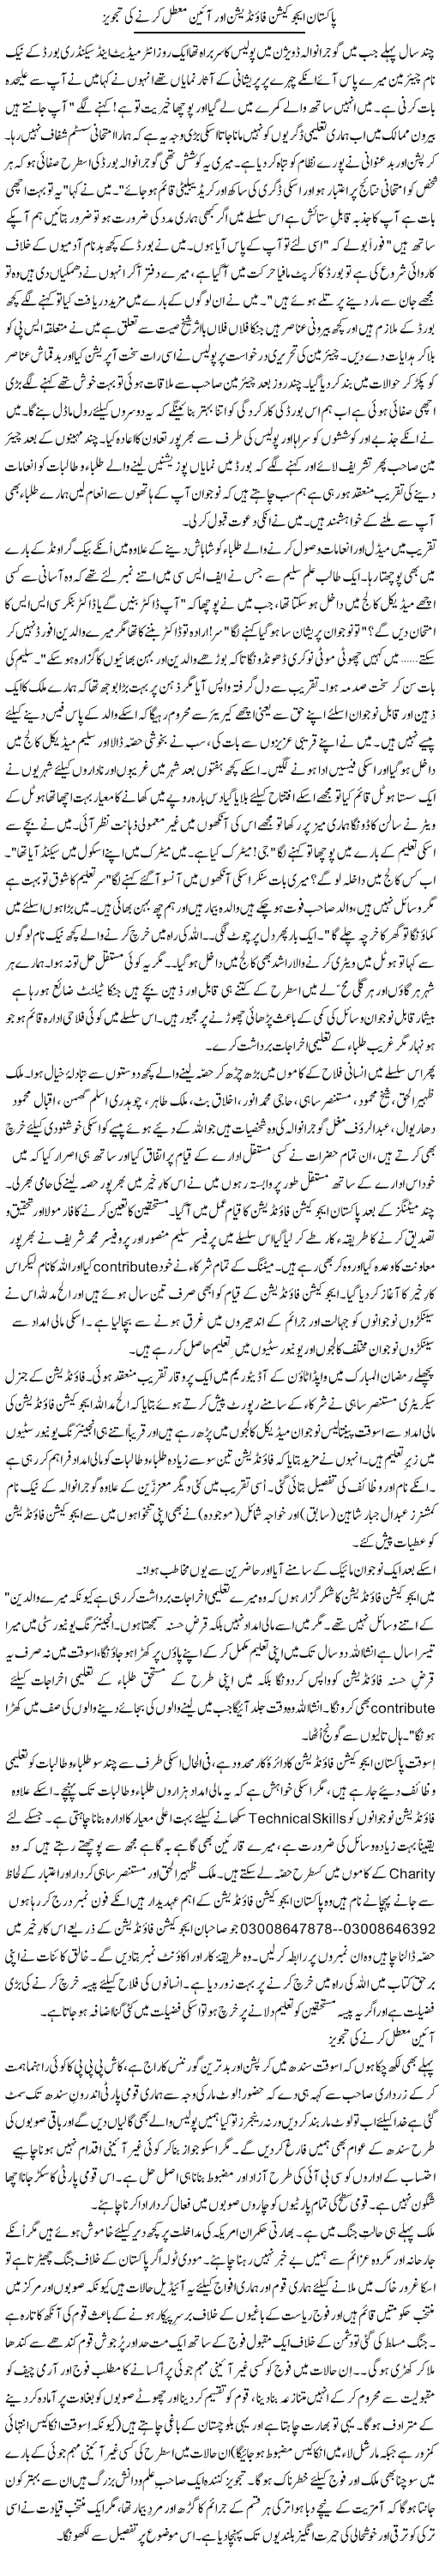 Pakistan Education Foundation Aur Aeen Muattal Karne Ki Tajweez | Zulfiqar Ahmed Cheema | Daily Urdu Columns